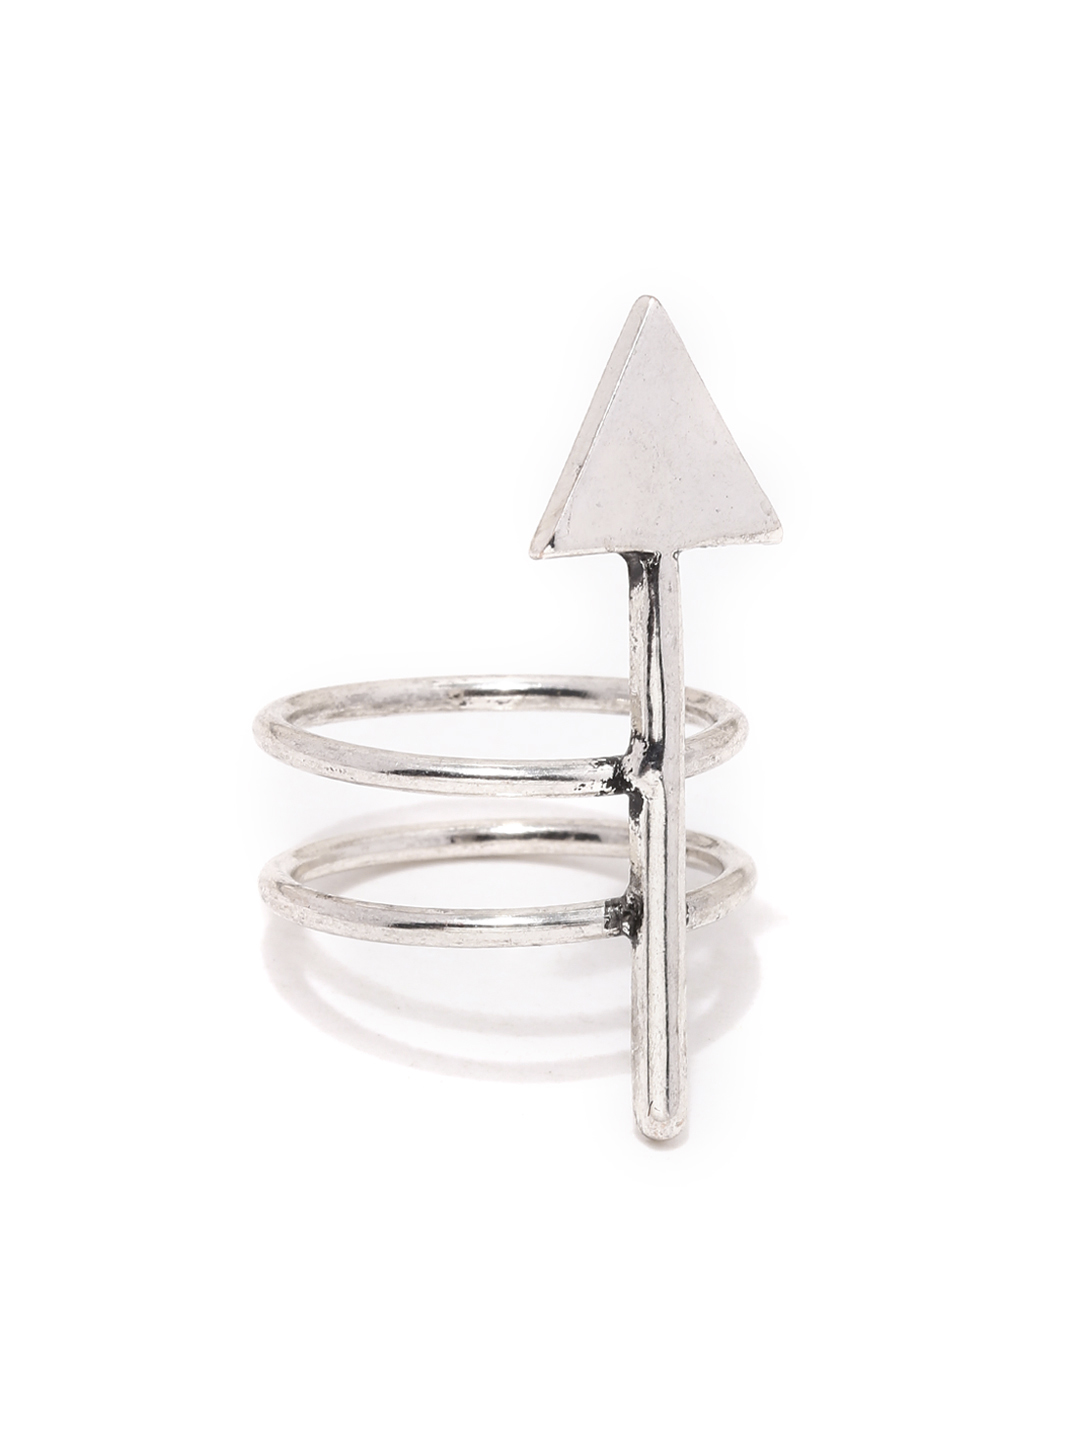 FunkyFish Oxidised Silver-Toned Arrow-Shaped Ring